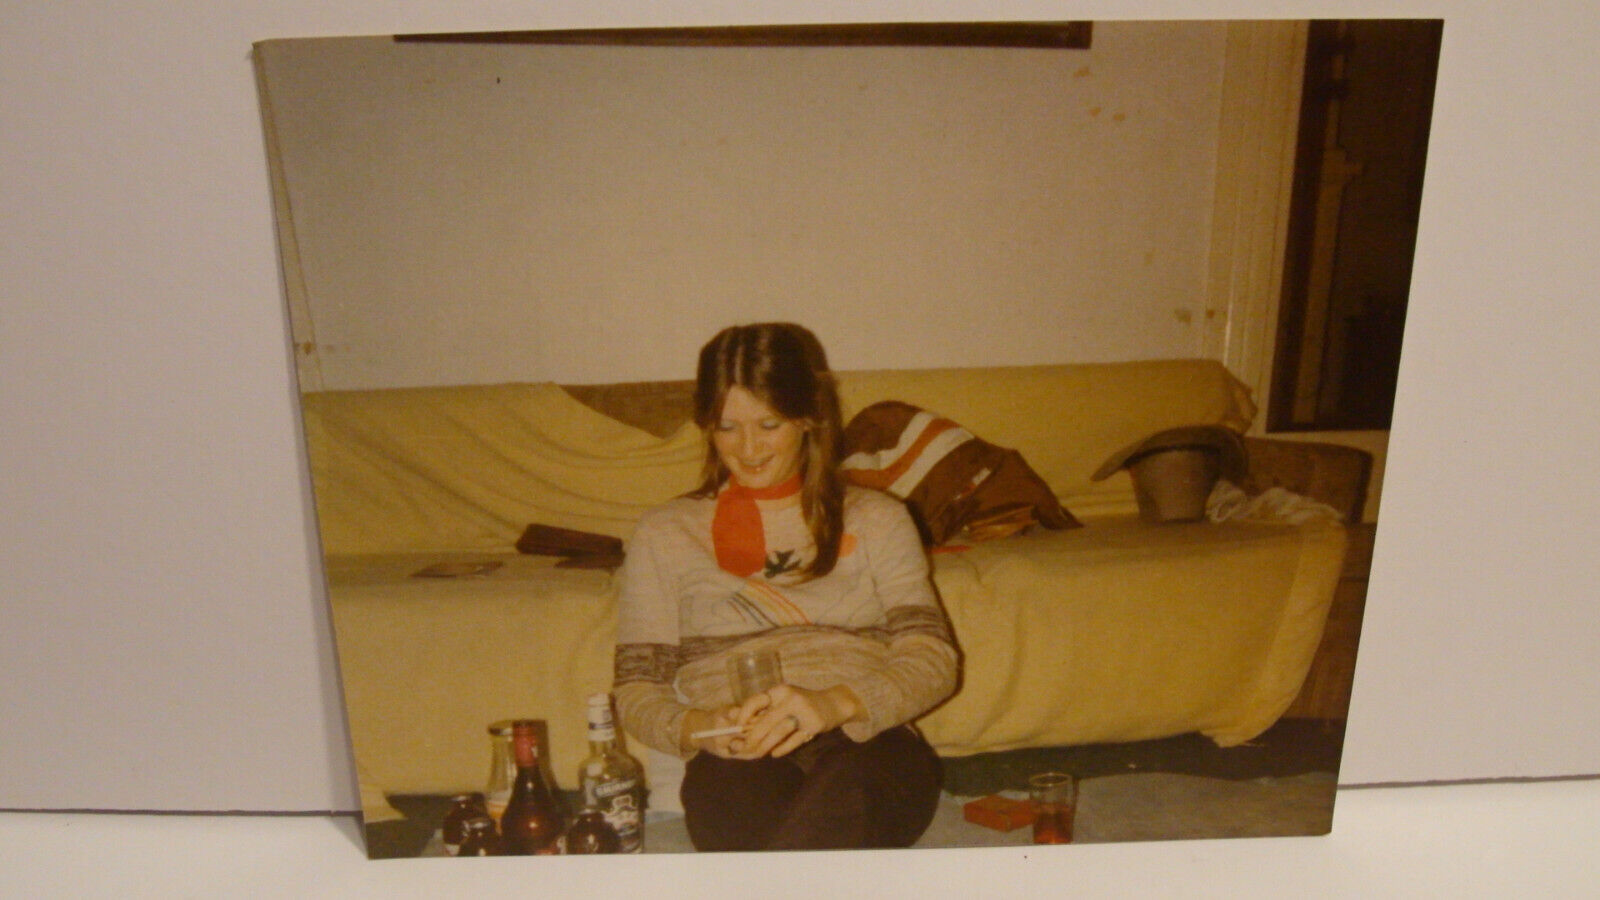 1980S VINTAGE FOUND PHOTOGRAPH ORIGINAL ART COLOR PHOTO PRETTY DRUNK WHITE GIRL